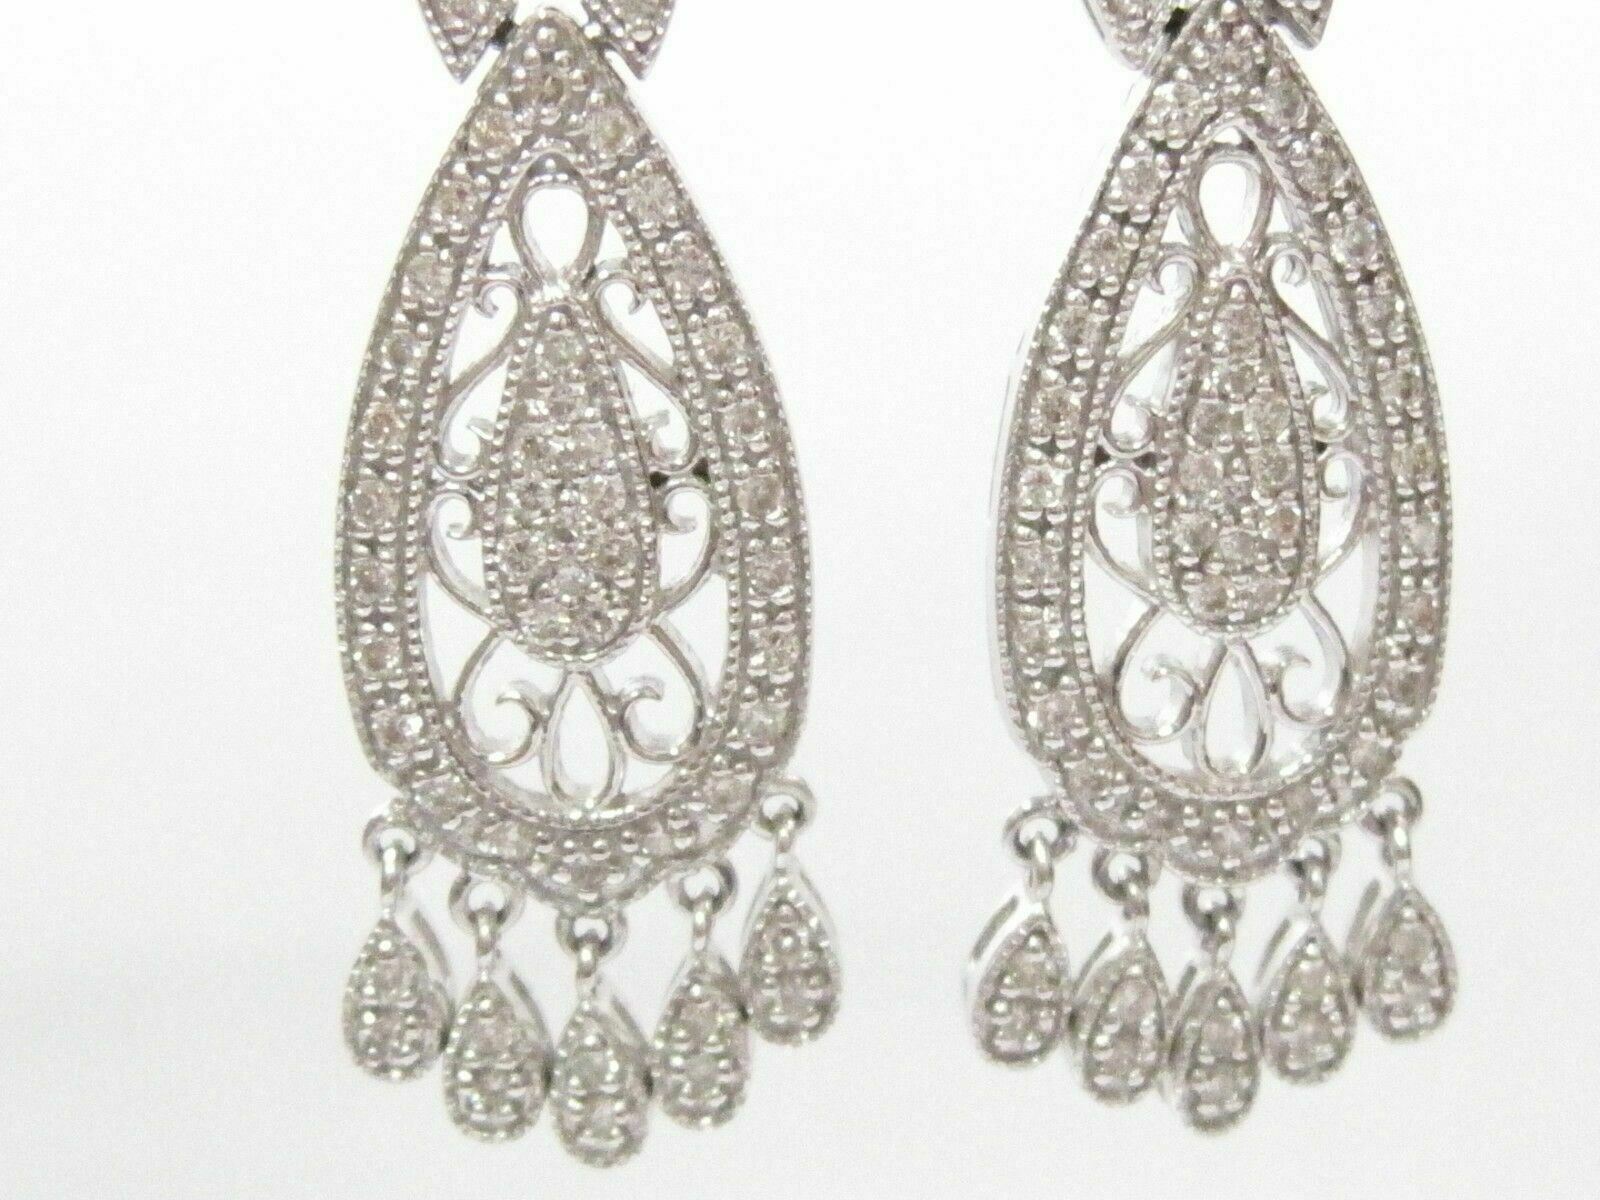 Fine Art Deco-style Chandelier Dangling Diamond Earrings G-H VS1 14k White Gold